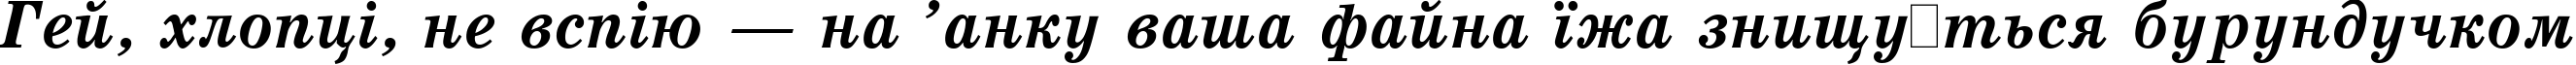 Пример написания шрифтом School Bold Italic:001.001 текста на украинском